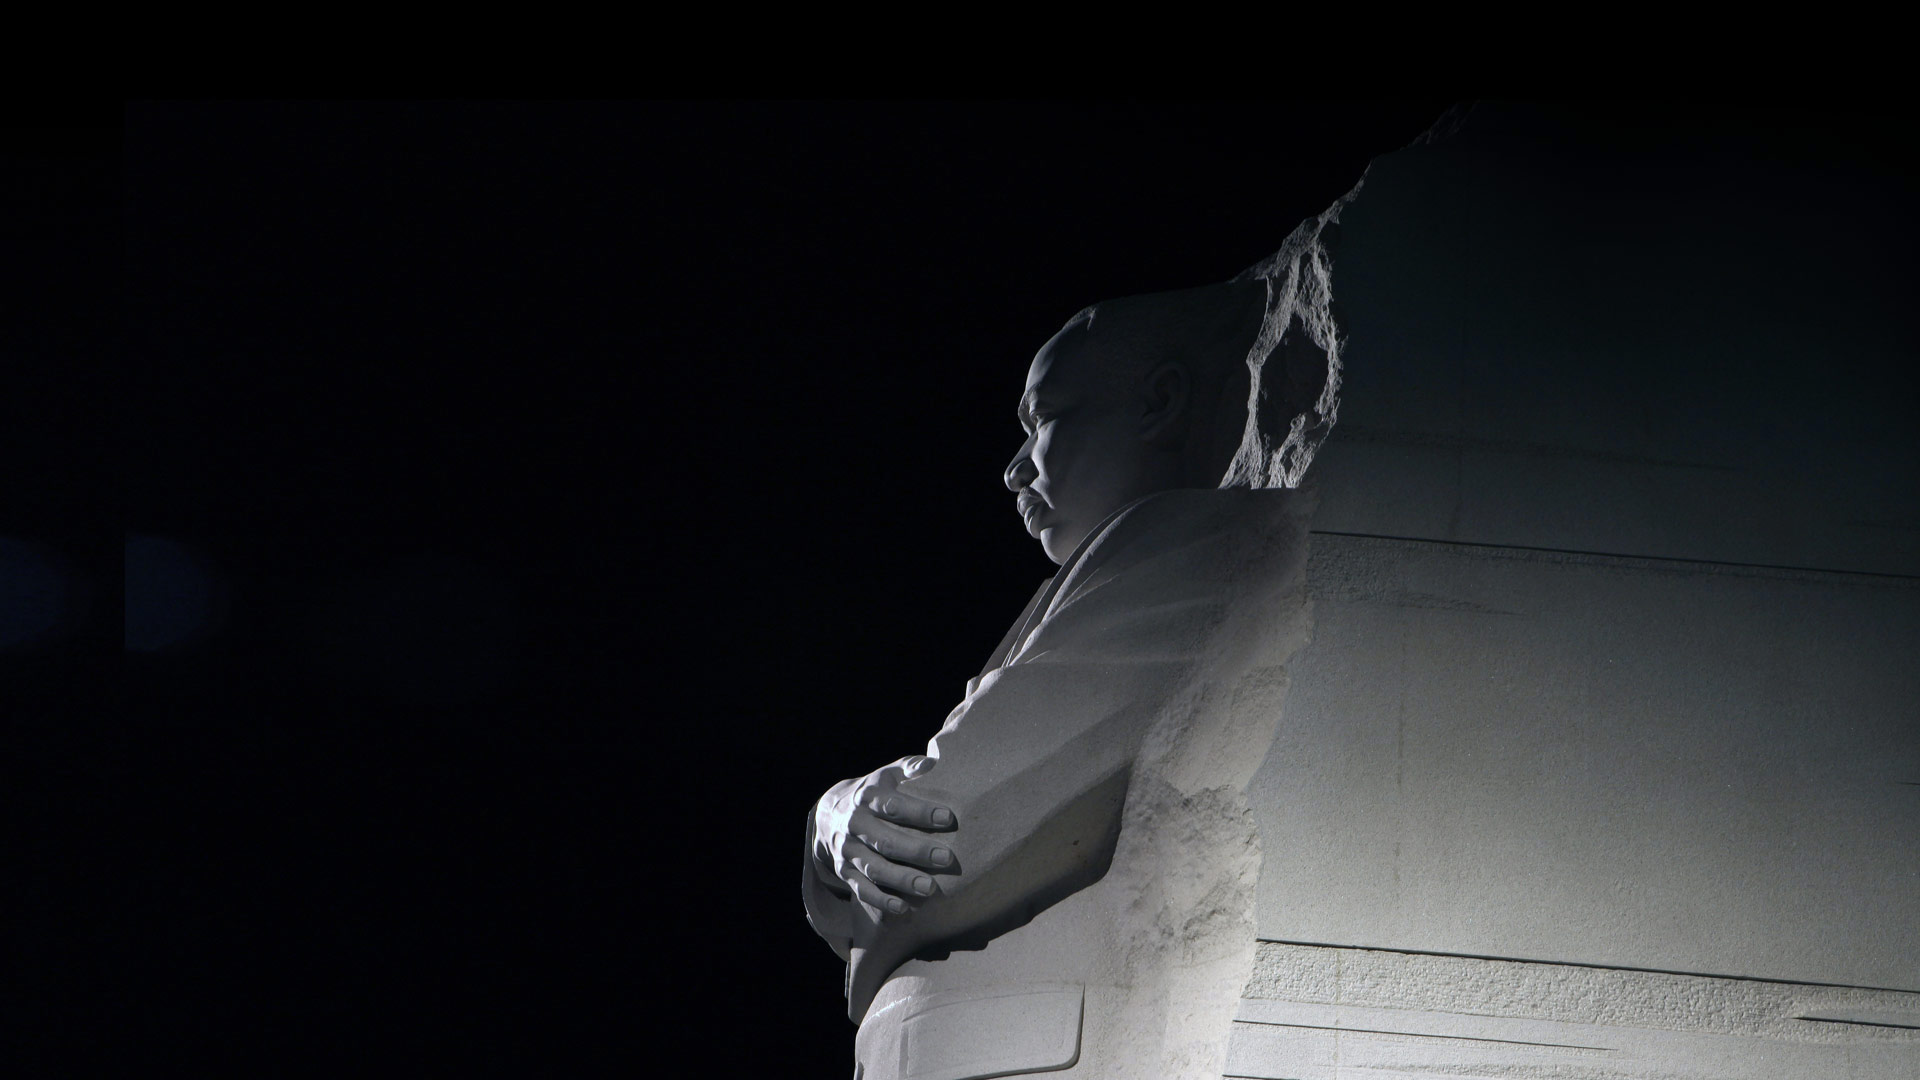 Dr. Martin Luther King, Jr. Memorial in Washington, DC